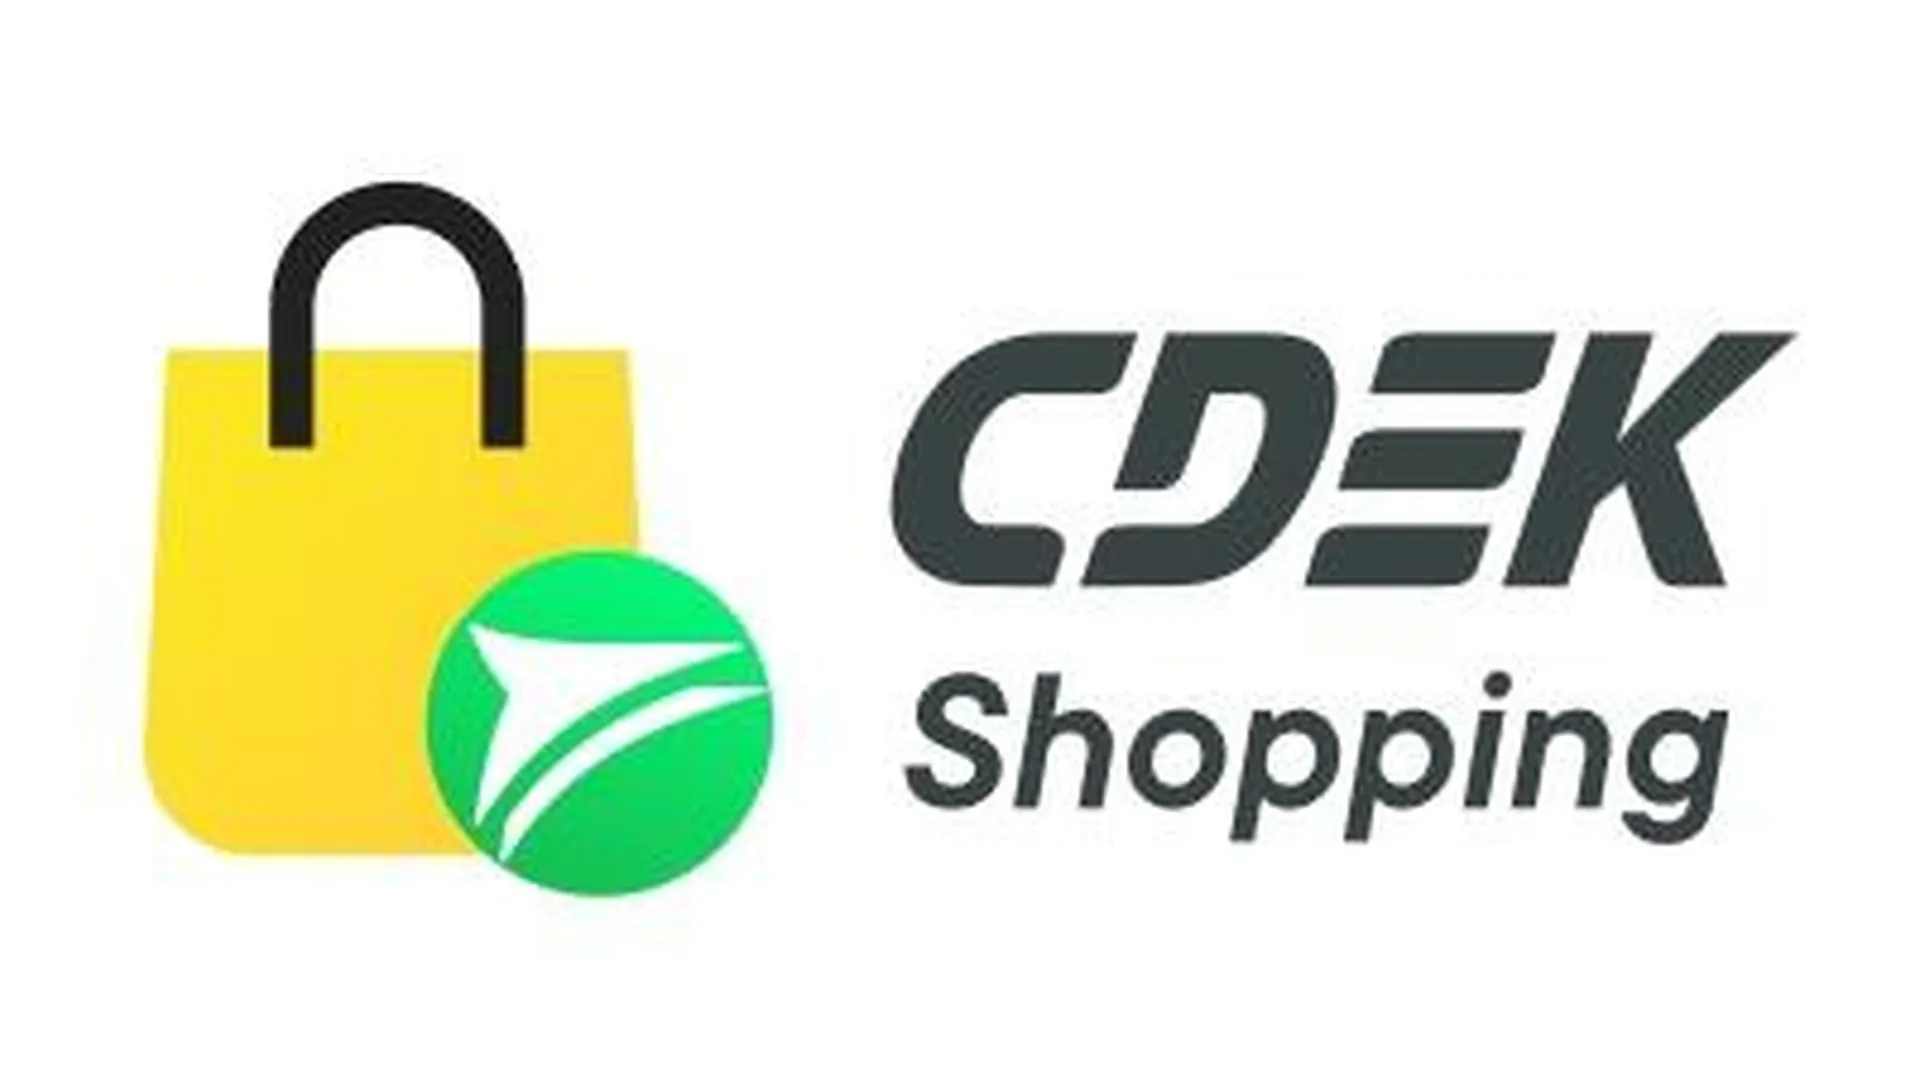 Страница "CDEK Shopping" в "ВКонтакте"